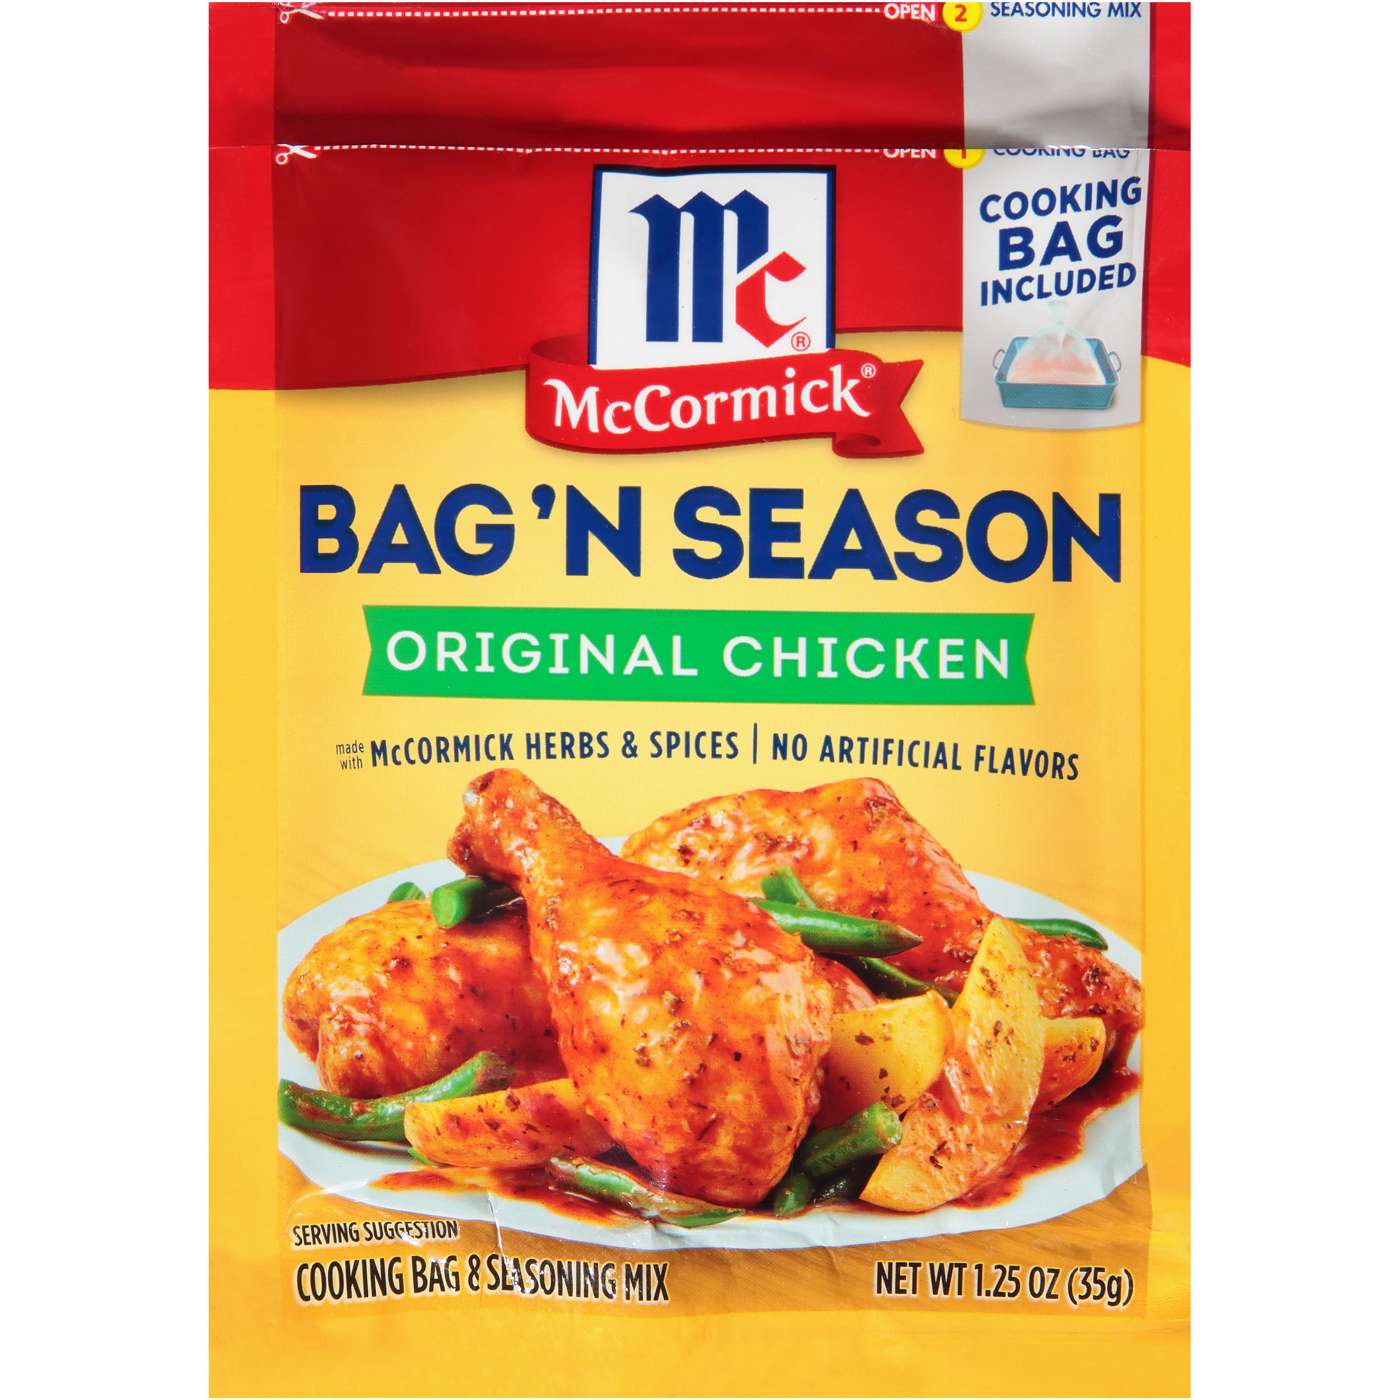 McCormick Bag 'n Season Original Chicken Cooking & Seasoning Mix; image 1 of 2